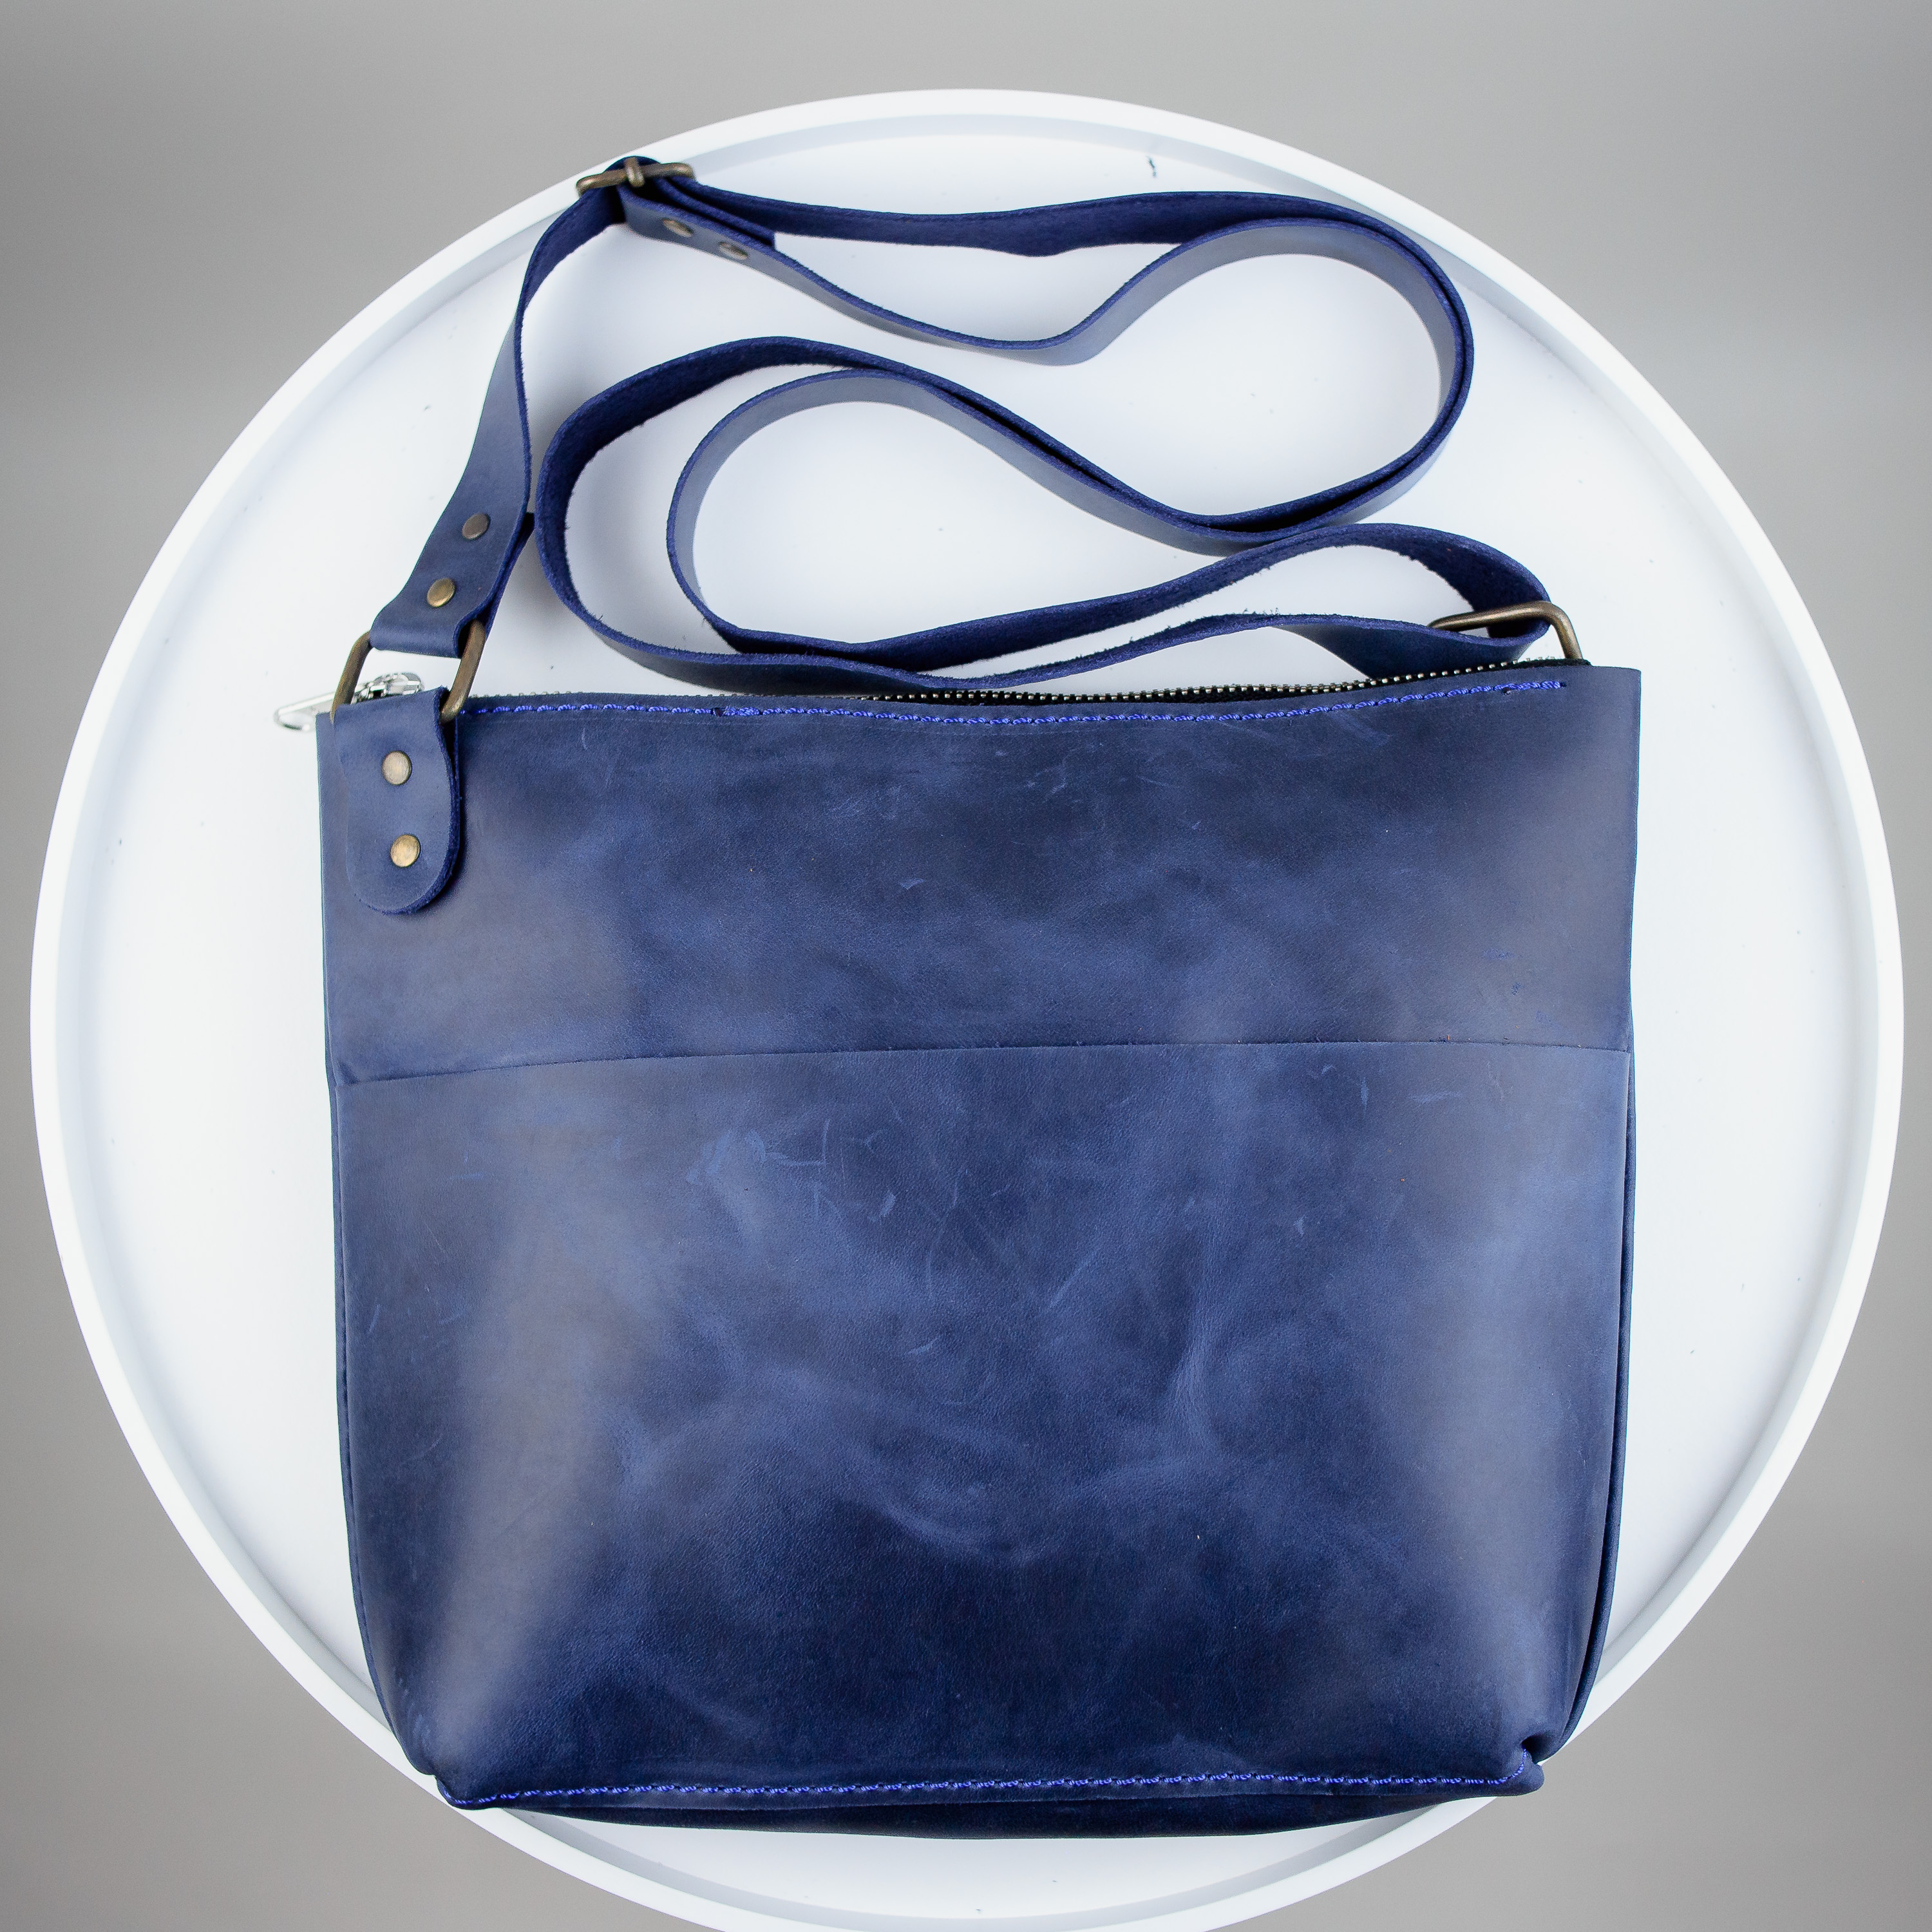 Мужская сумка через плечо кожаная синяя SKILL - Фото 2